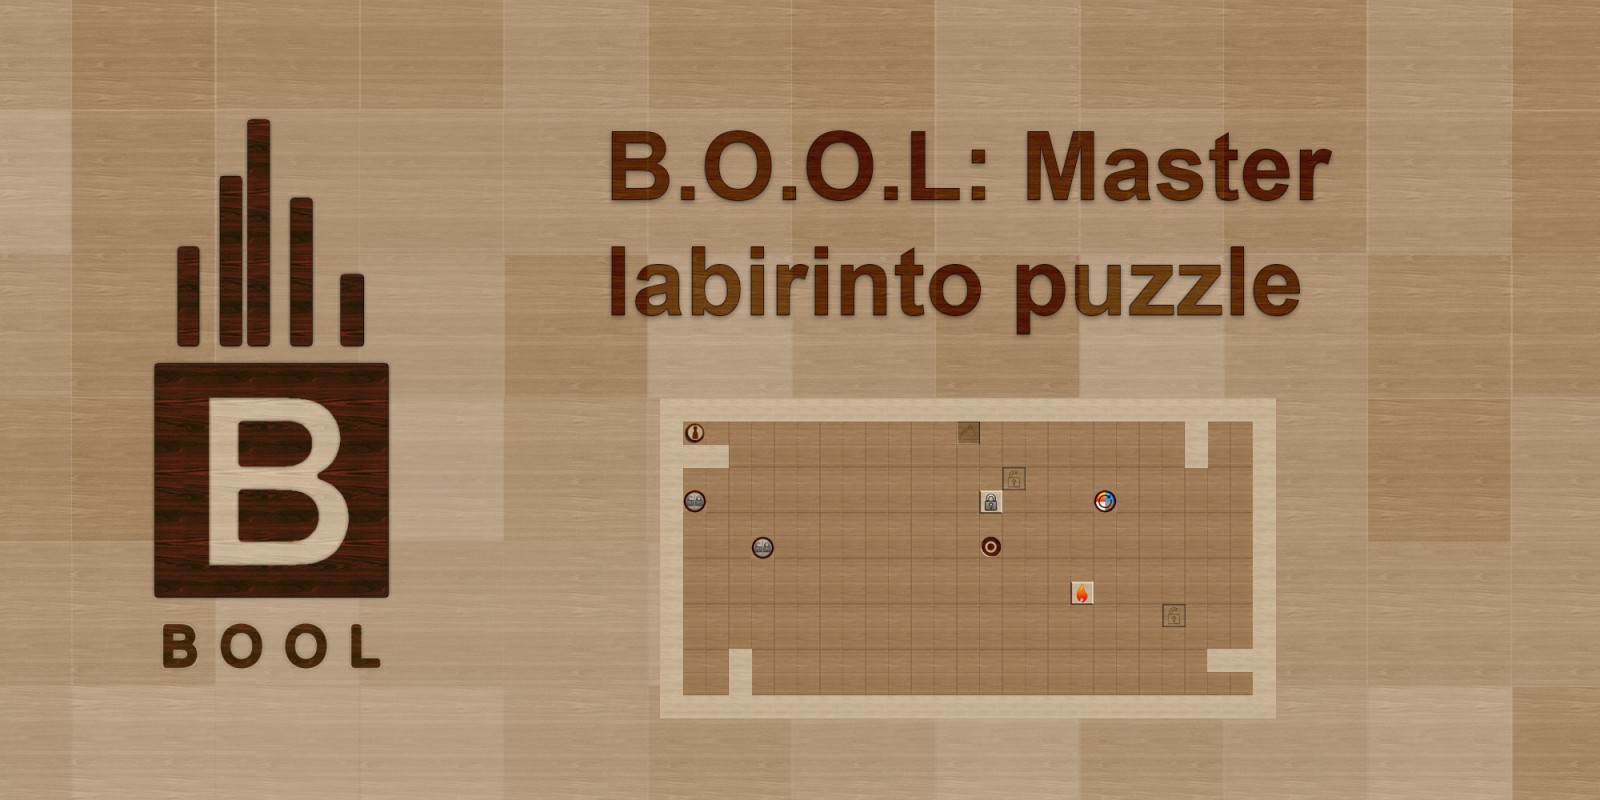 B.O.O.L: Master labirinto puzzle